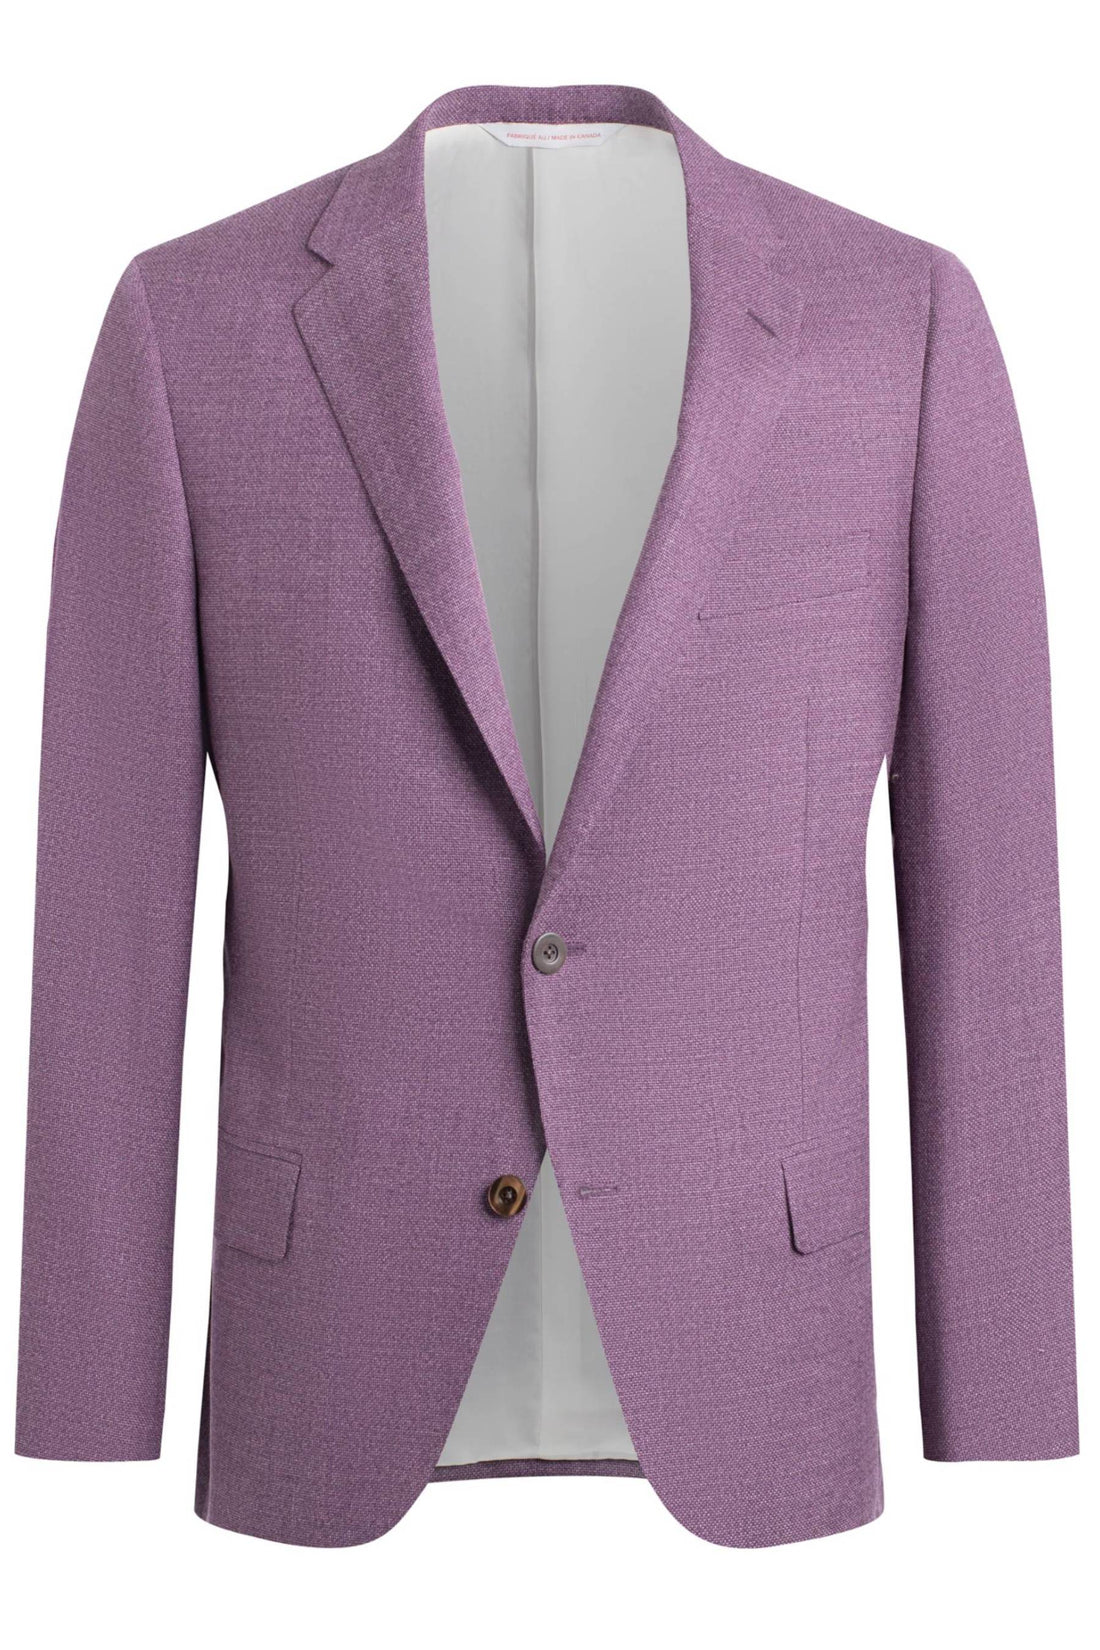 Samuelsohn Purple Basketweave Jacket